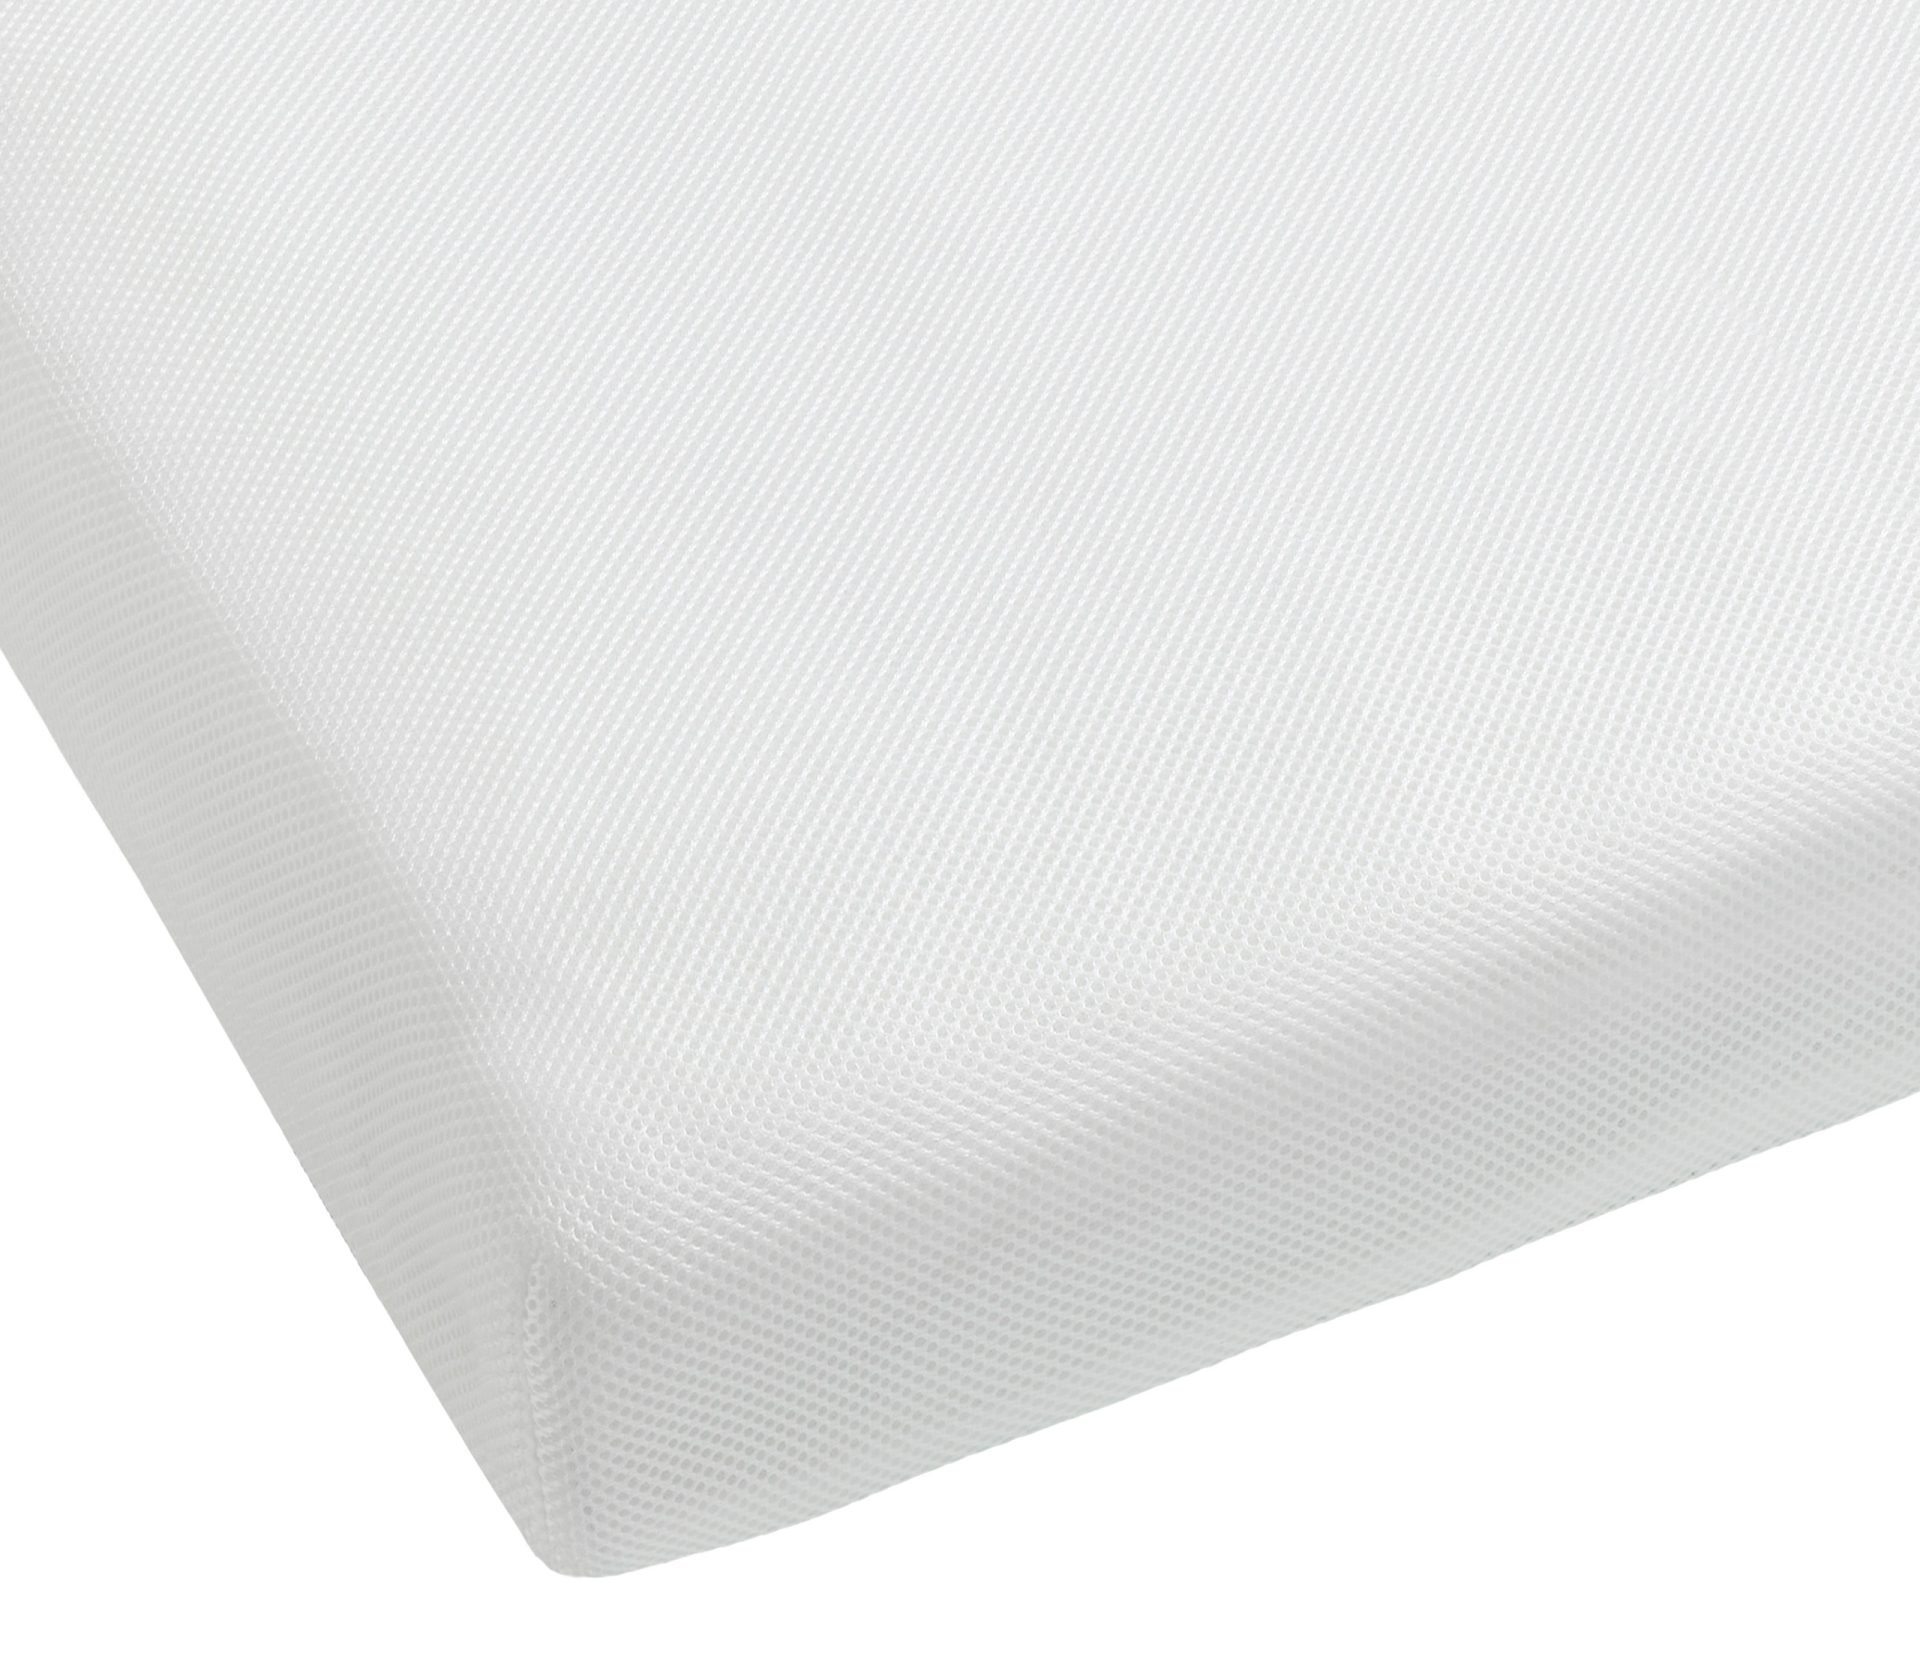 Premium Core Pocket Sprung Cot Bed Mattress